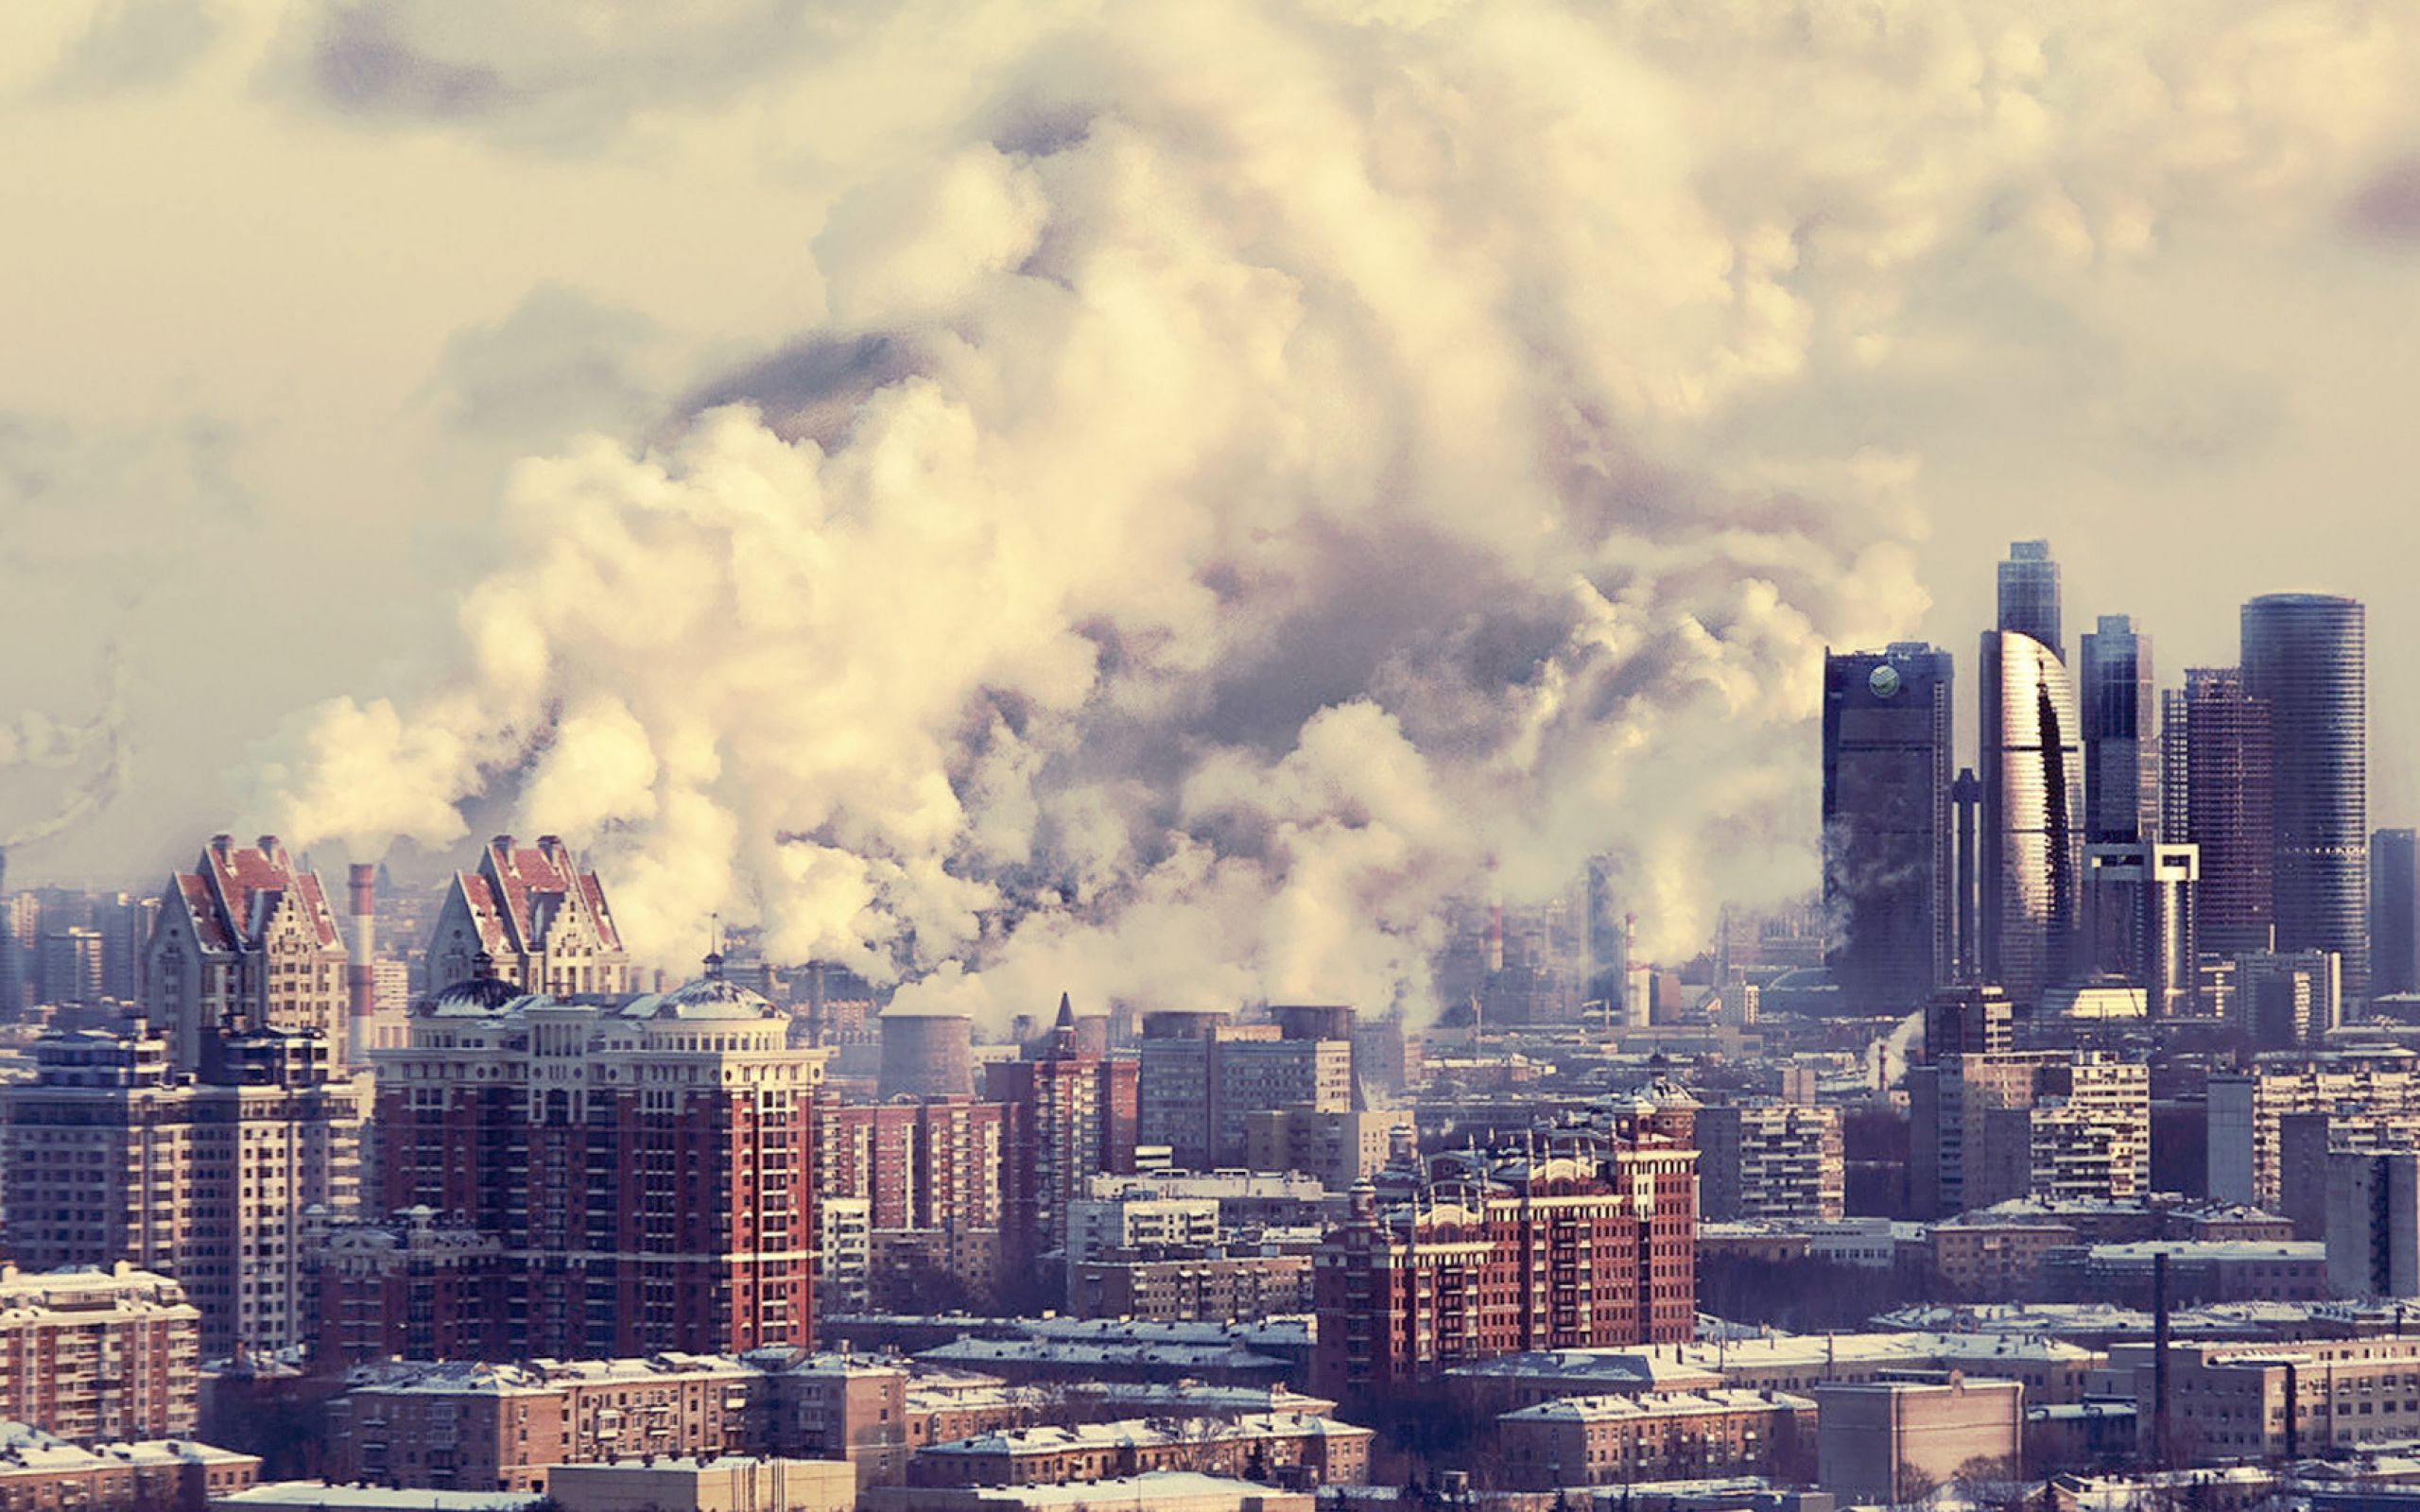 This pollution is gathered in clouds. Москва Сити смог. Загрязнение воздуха в городе. Город в дыму. Загрязнение атмосферы в городах.